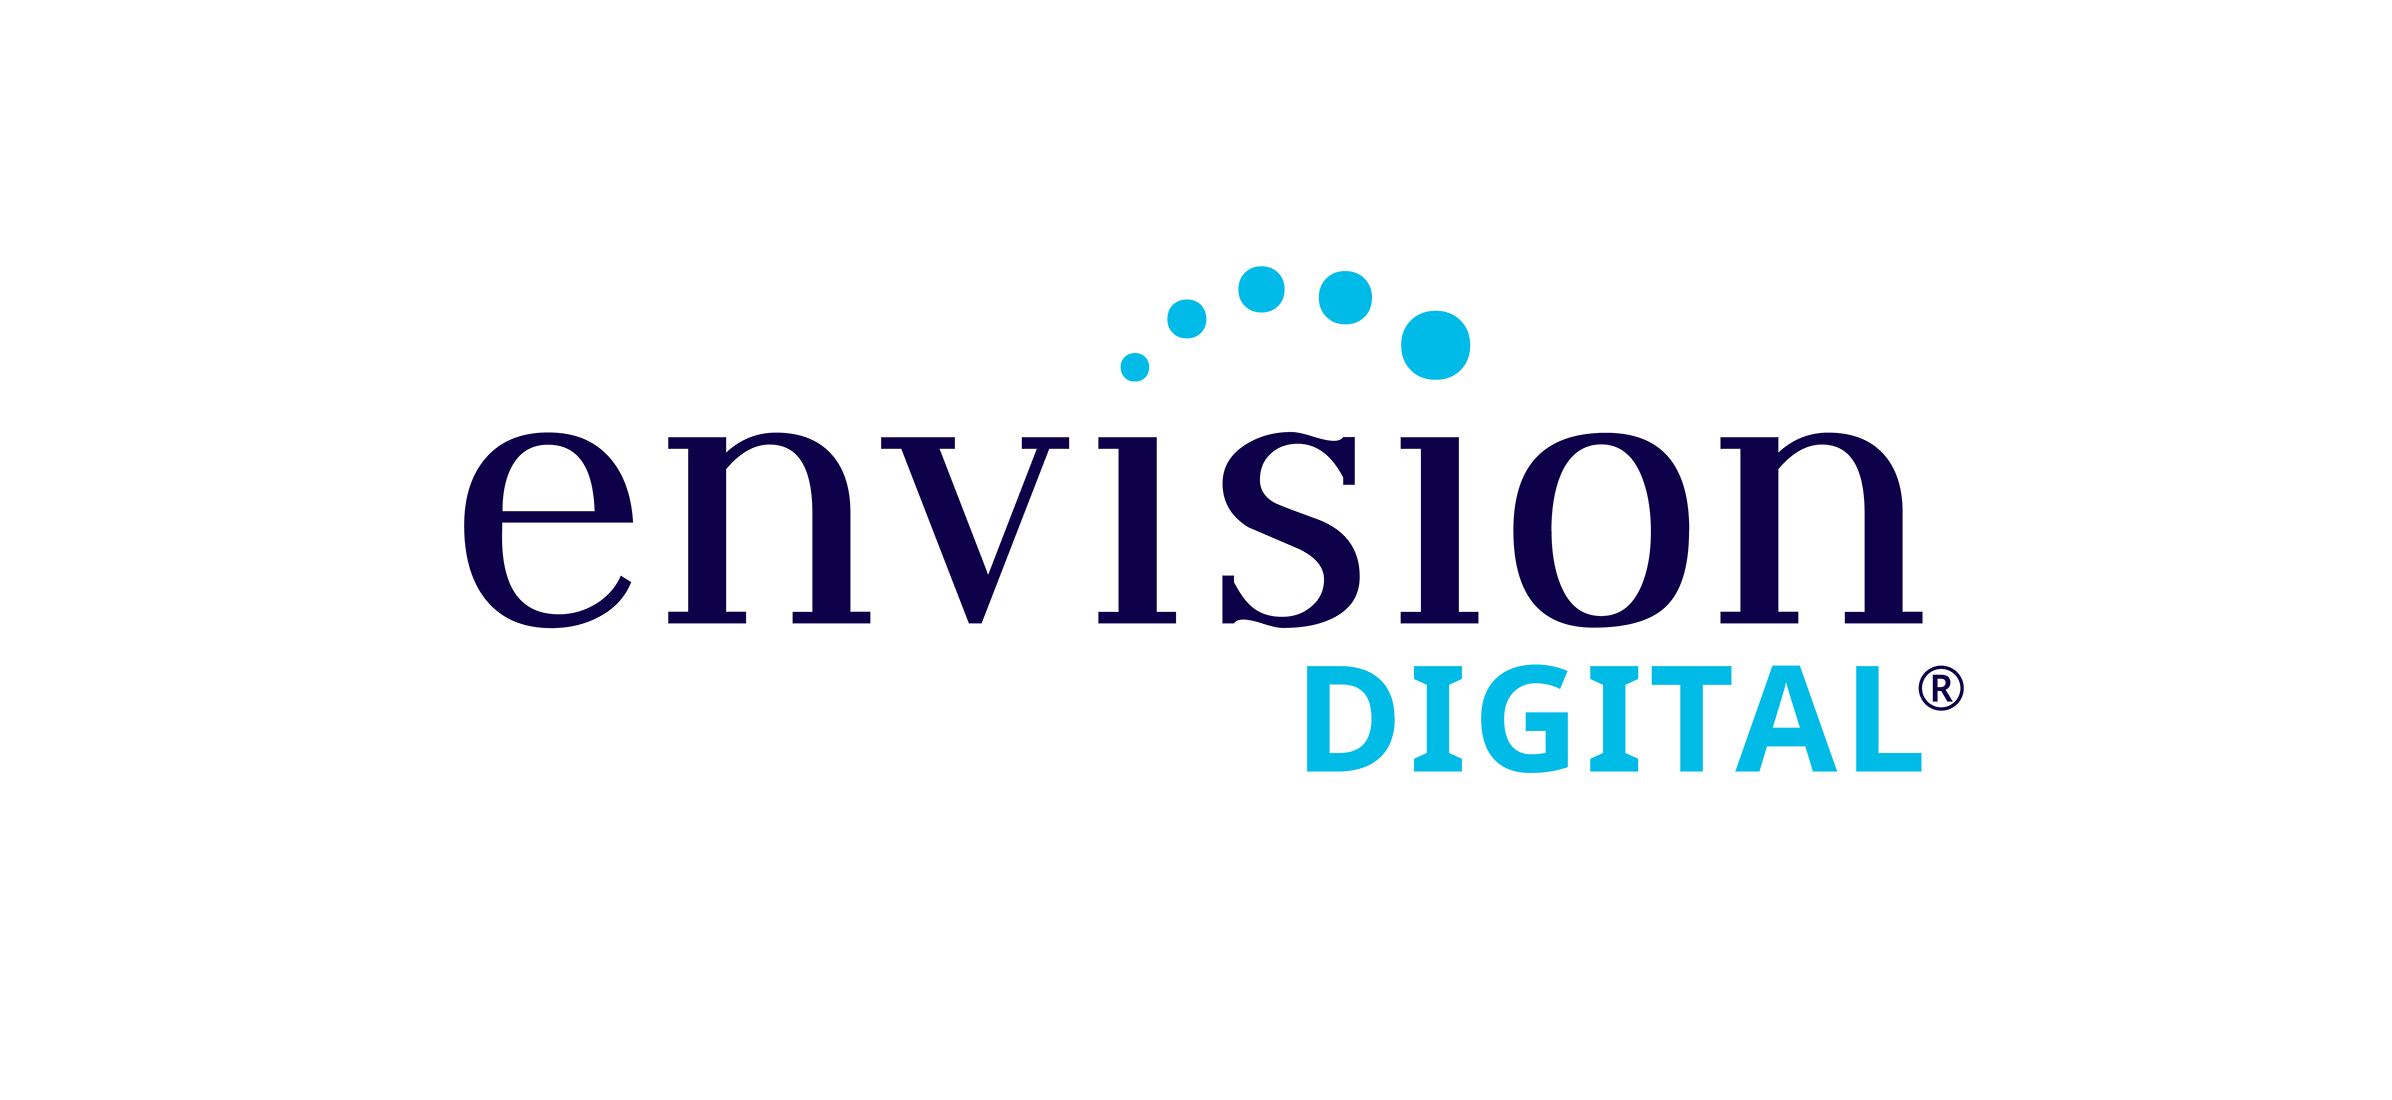 The Envision Digital logo